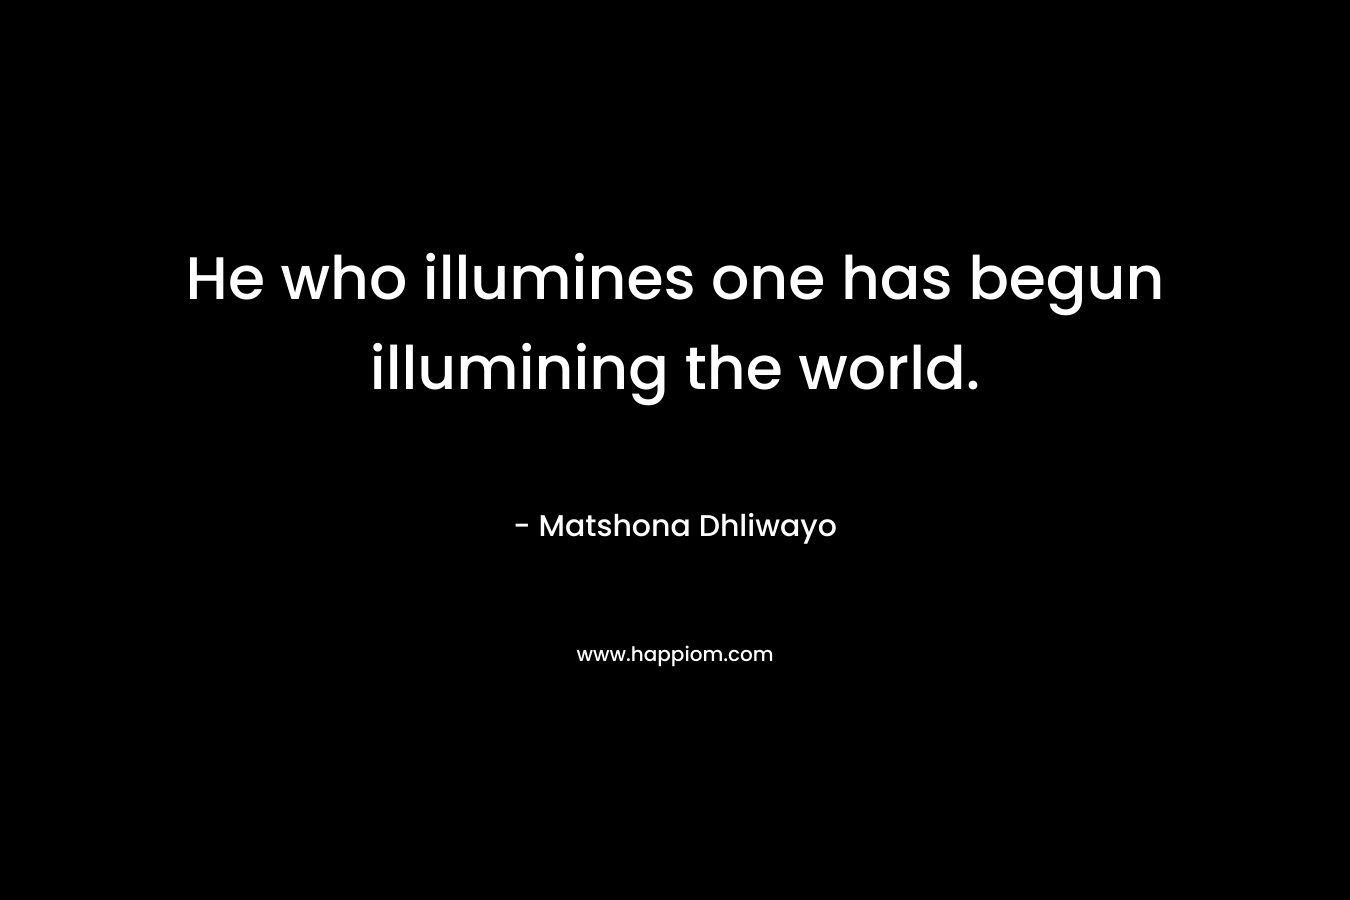 He who illumines one has begun illumining the world.